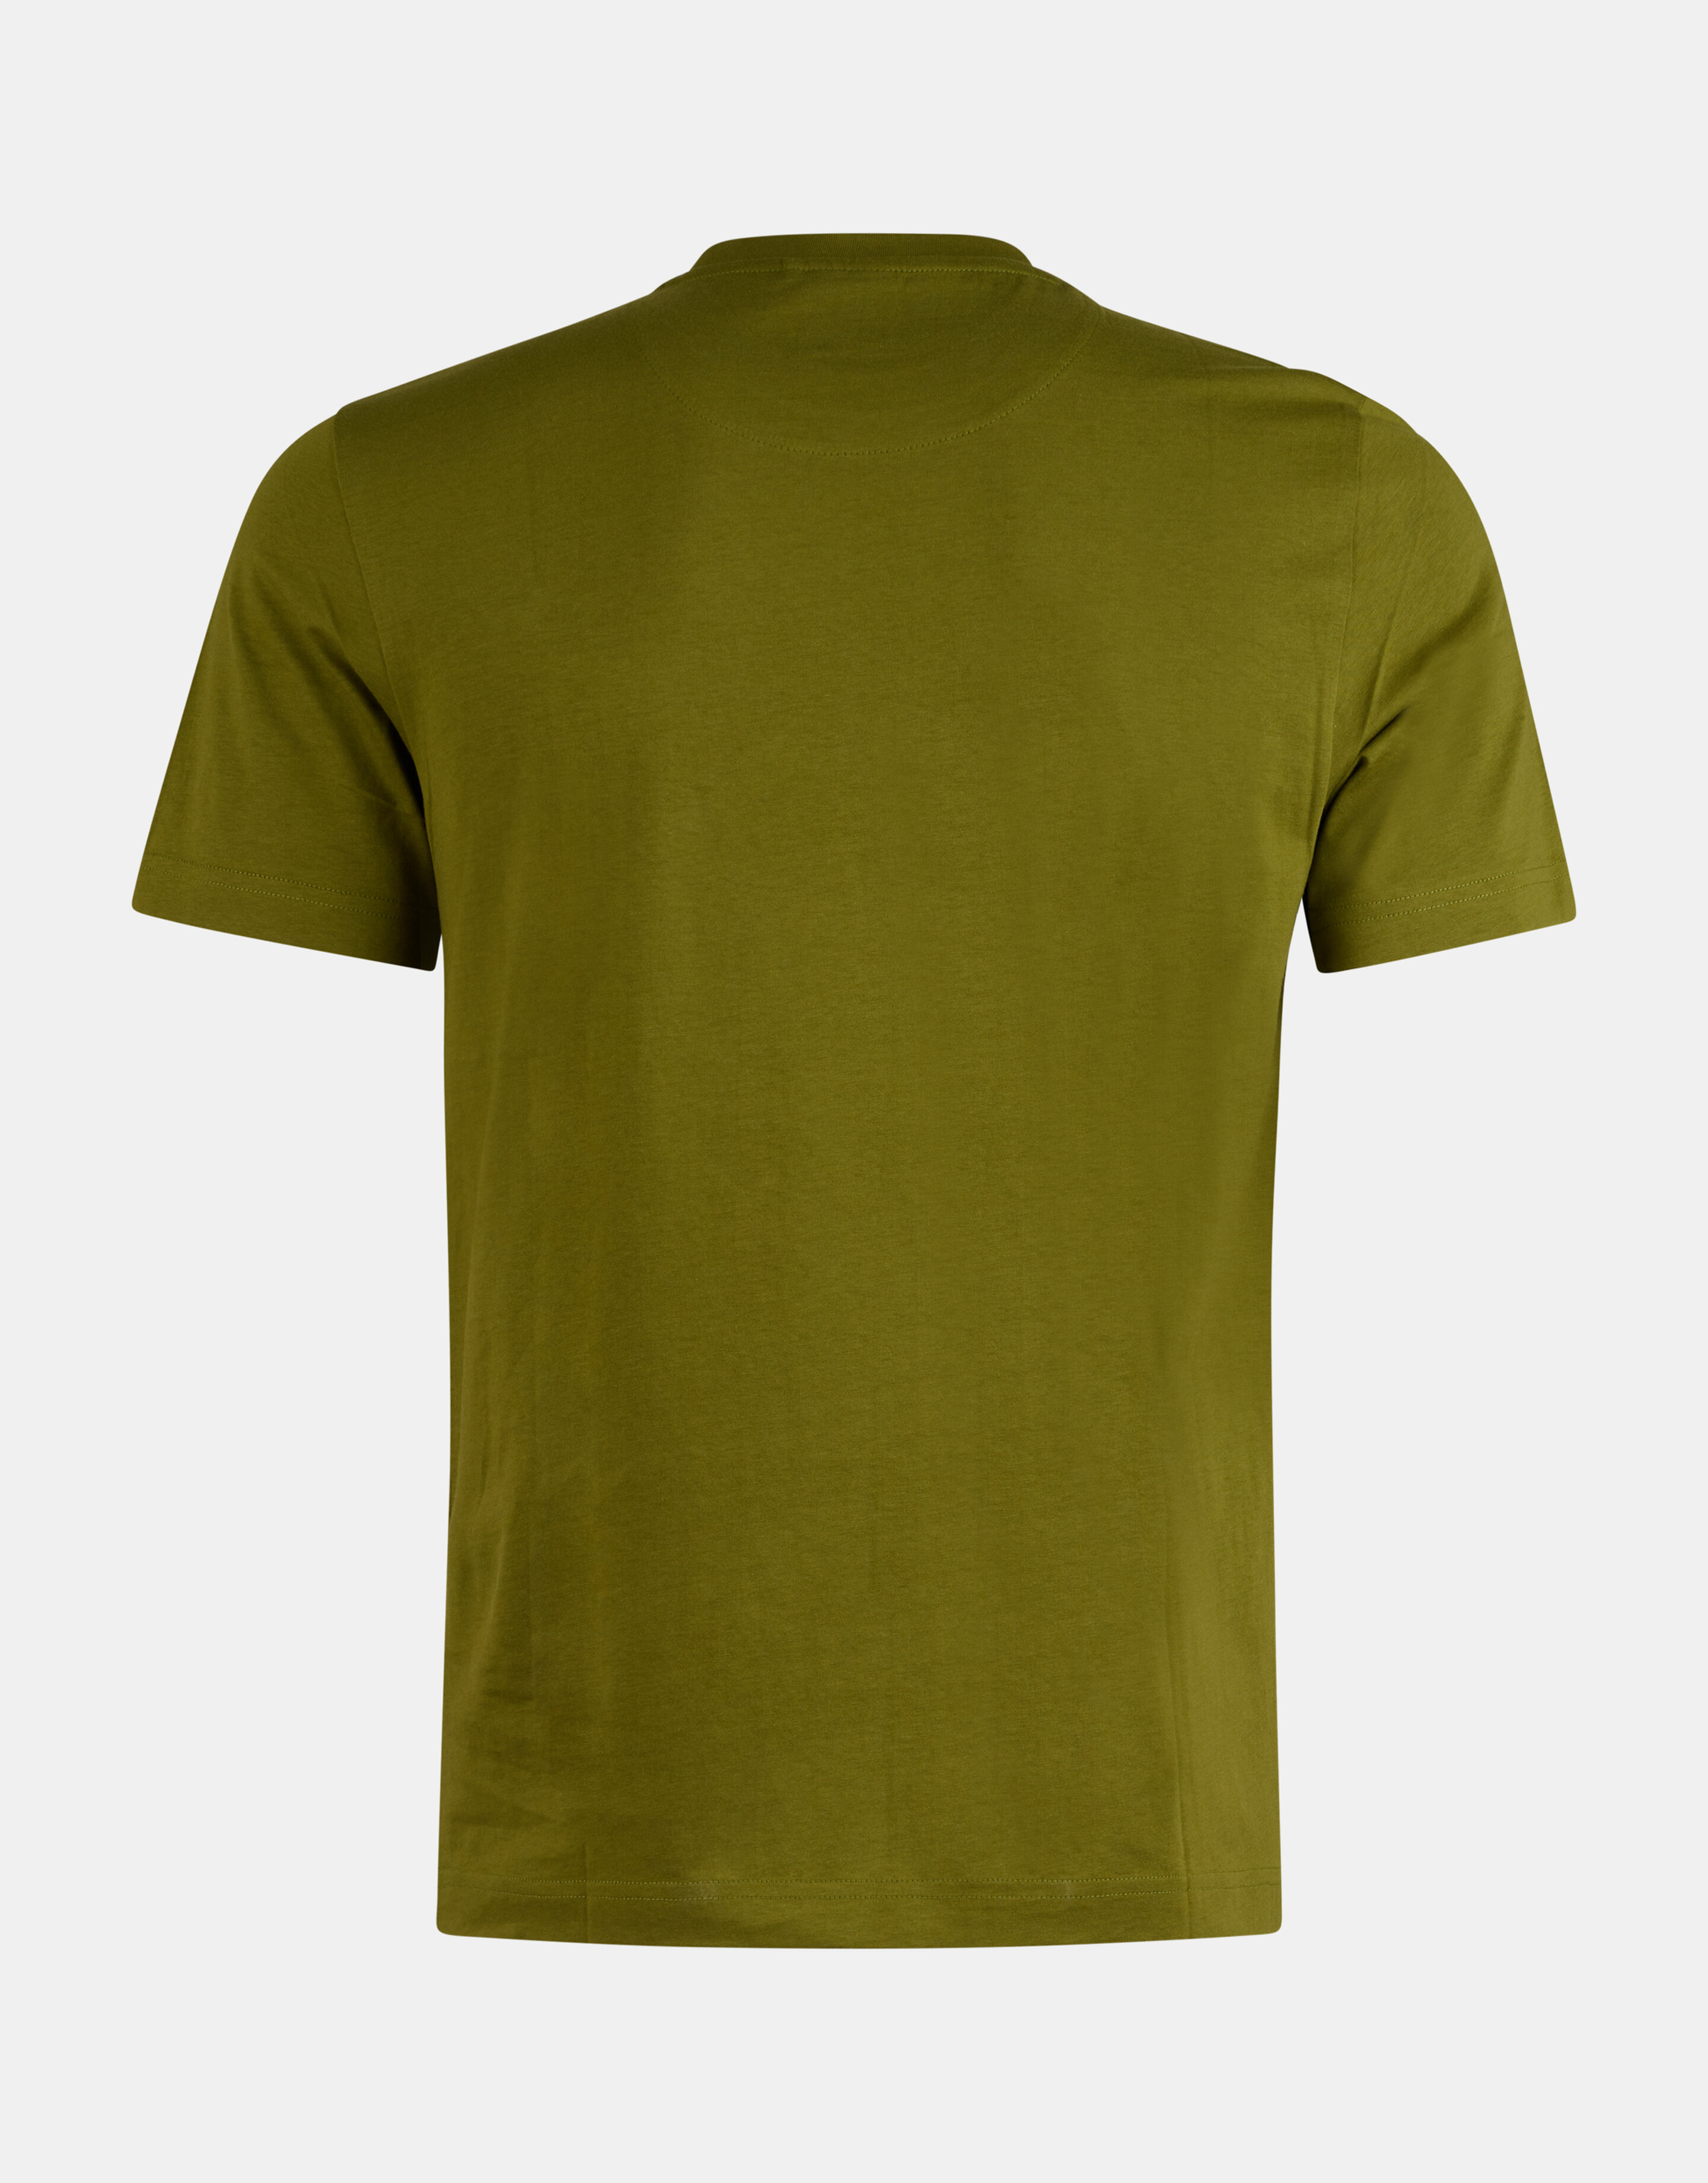 Rundes T-Shirt REFILL